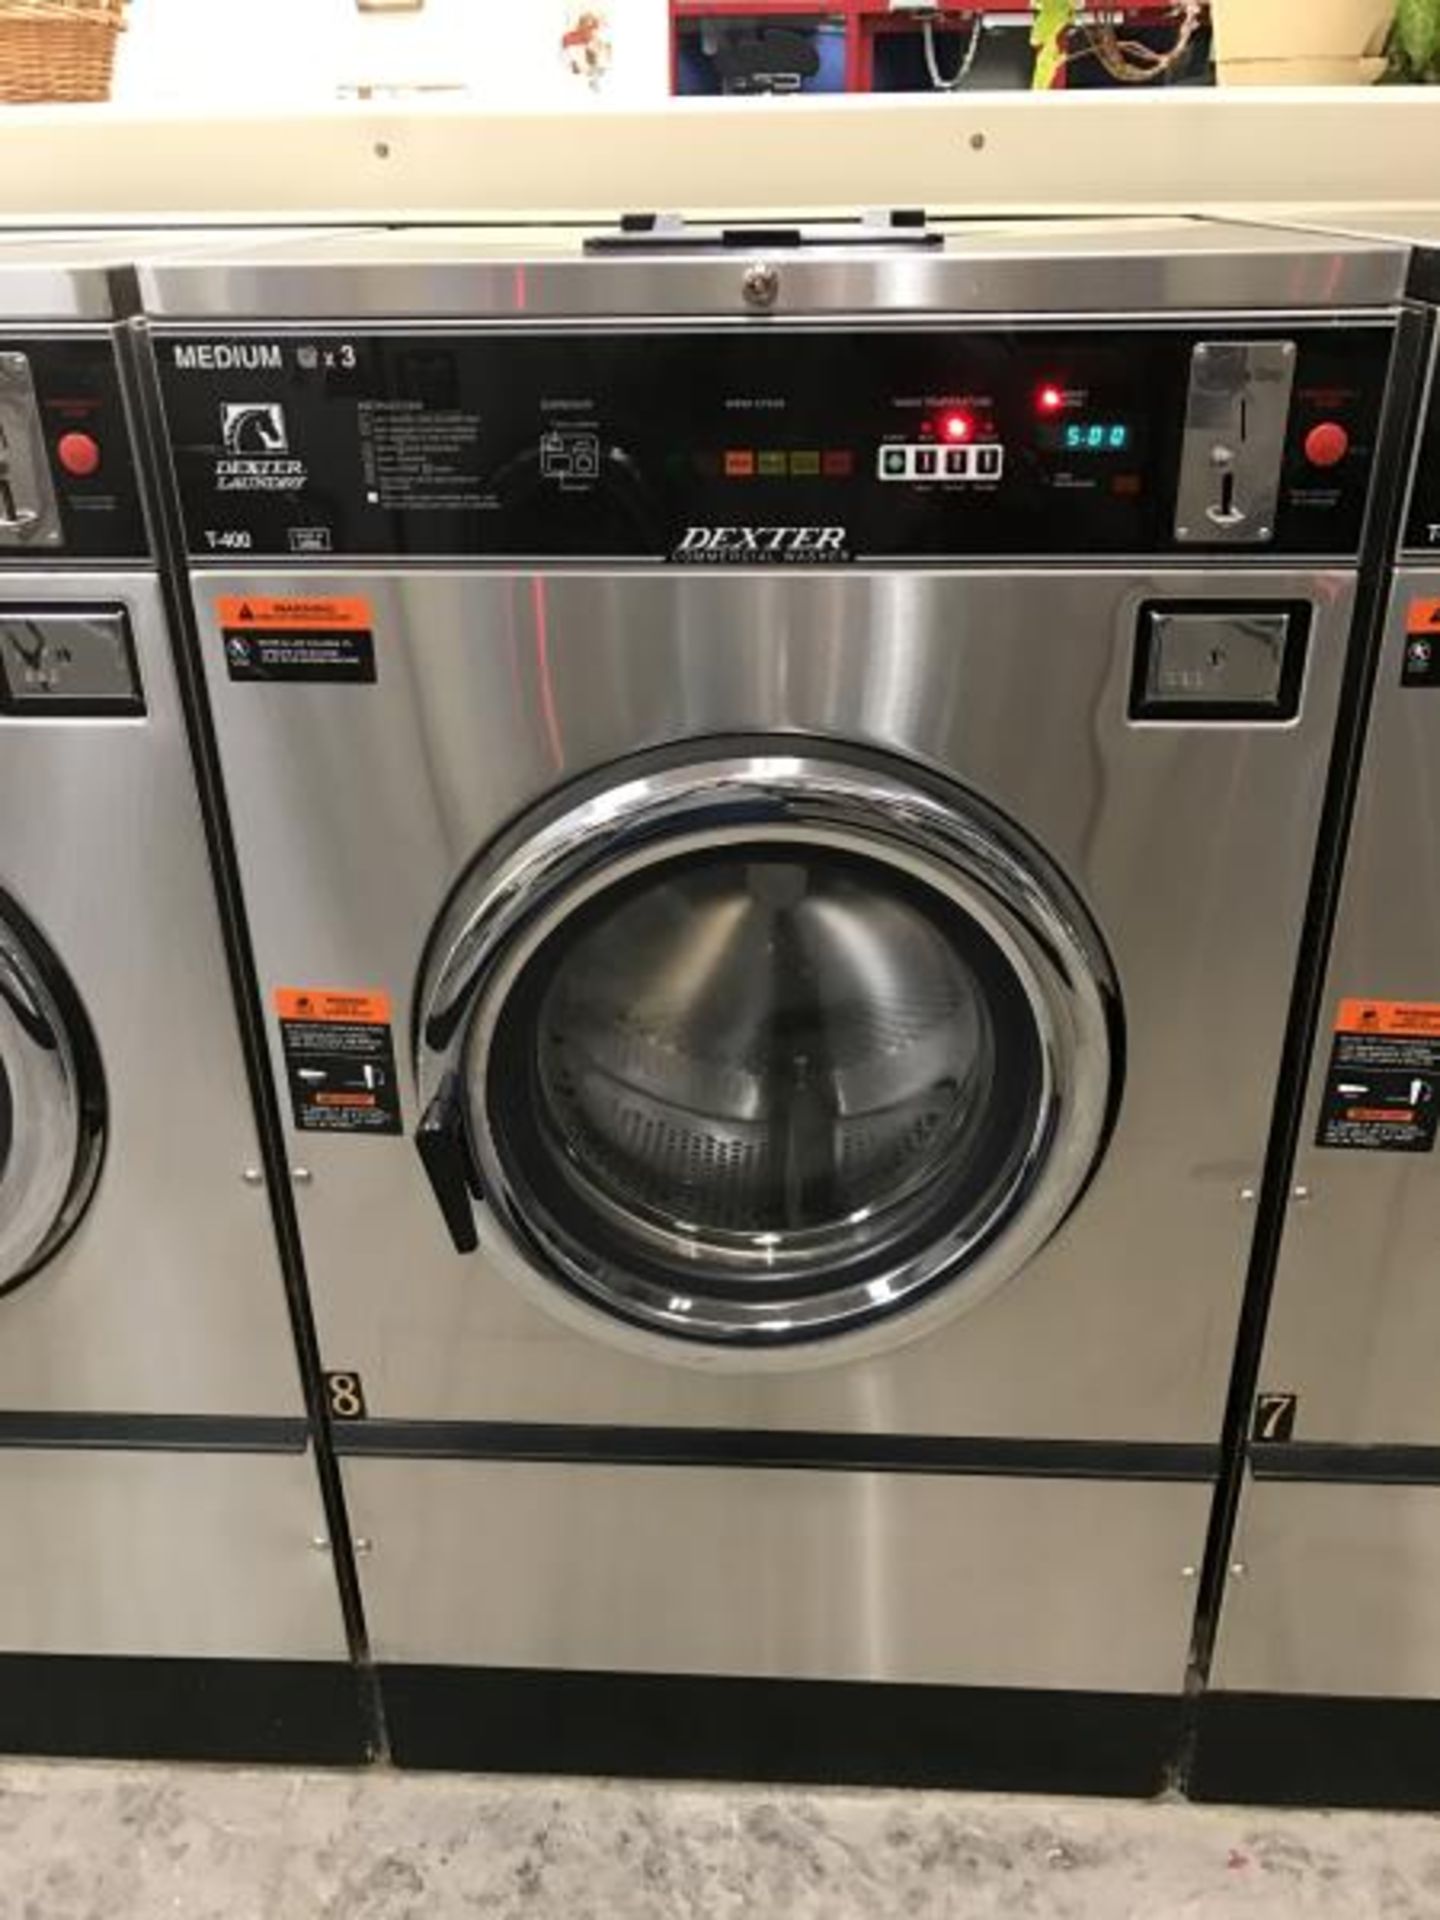 Dexter Commercial Washing Machine, Medium x 3, 30 Lbs., Model: T-400 / WCAD30KCX-12CN, SN: 531763